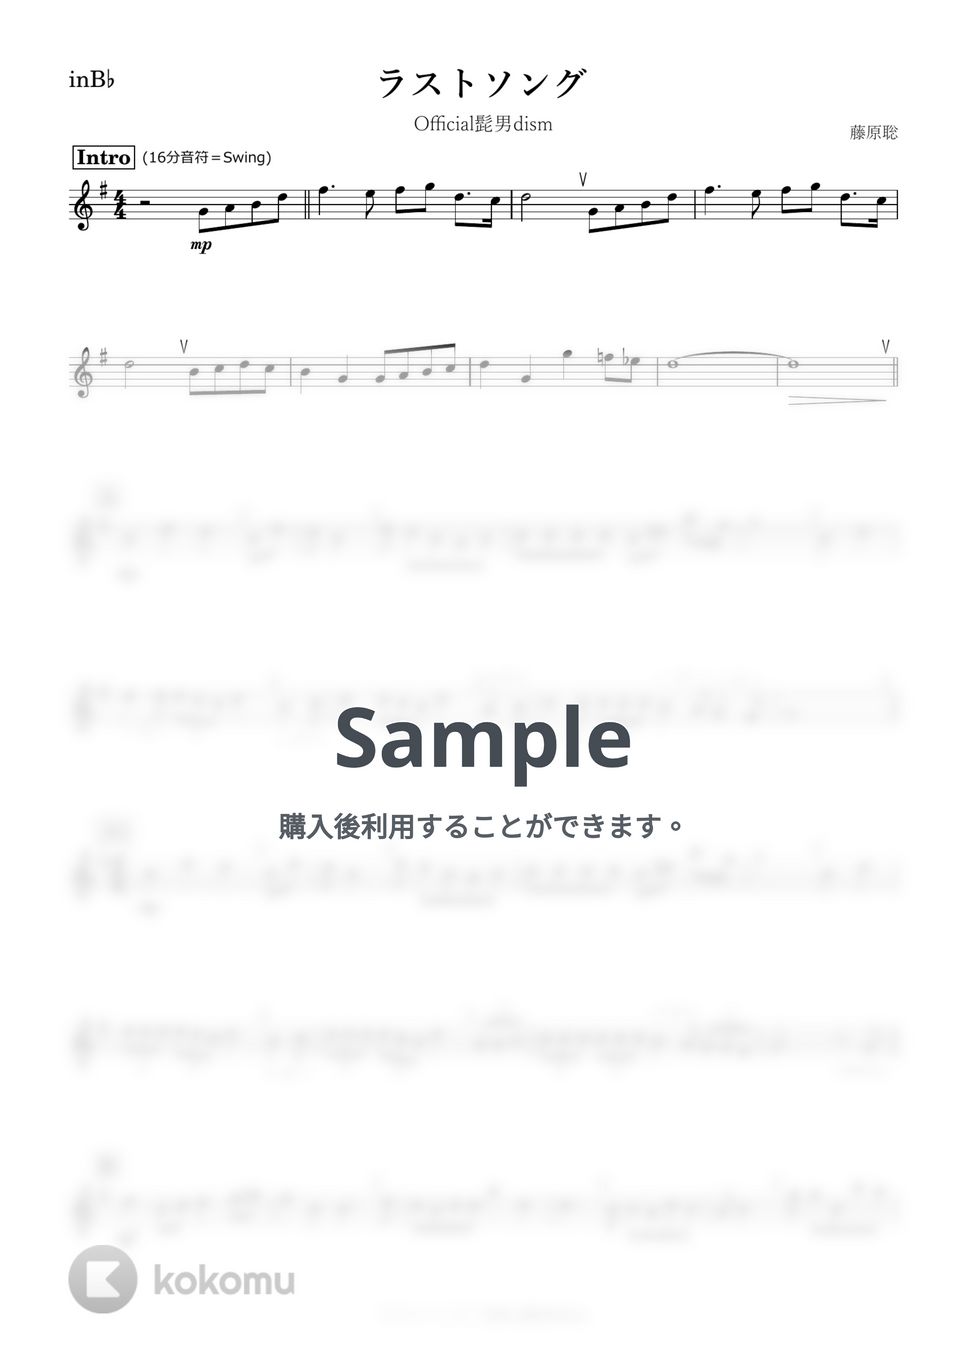 Official髭男dism - ラストソング (B♭) by kanamusic